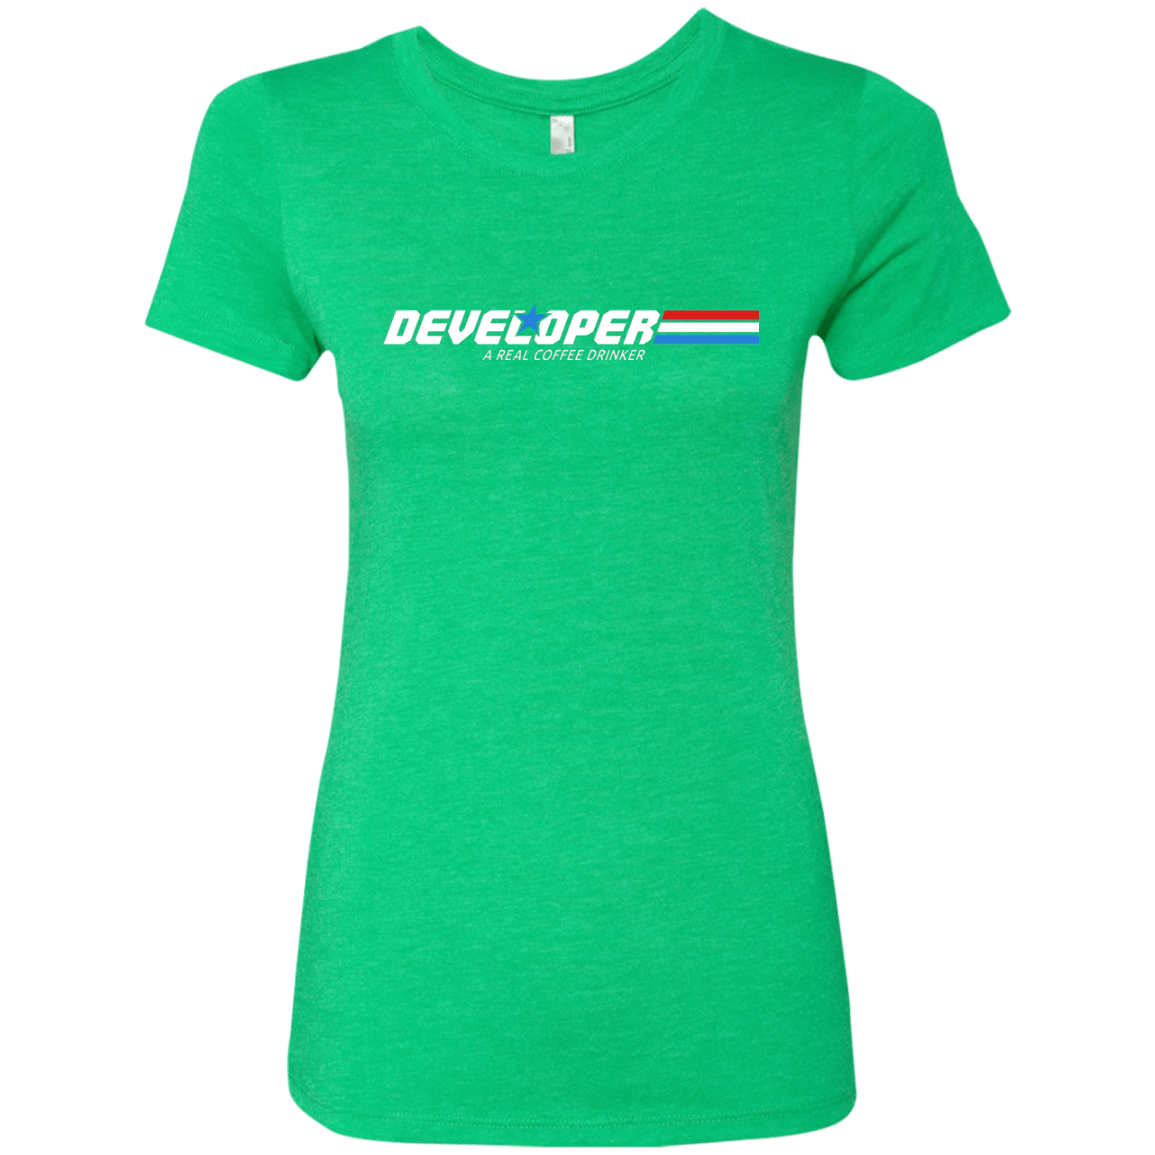 T-Shirts Envy / Small Developer - A Real Coffee Drinker Women's Triblend T-Shirt